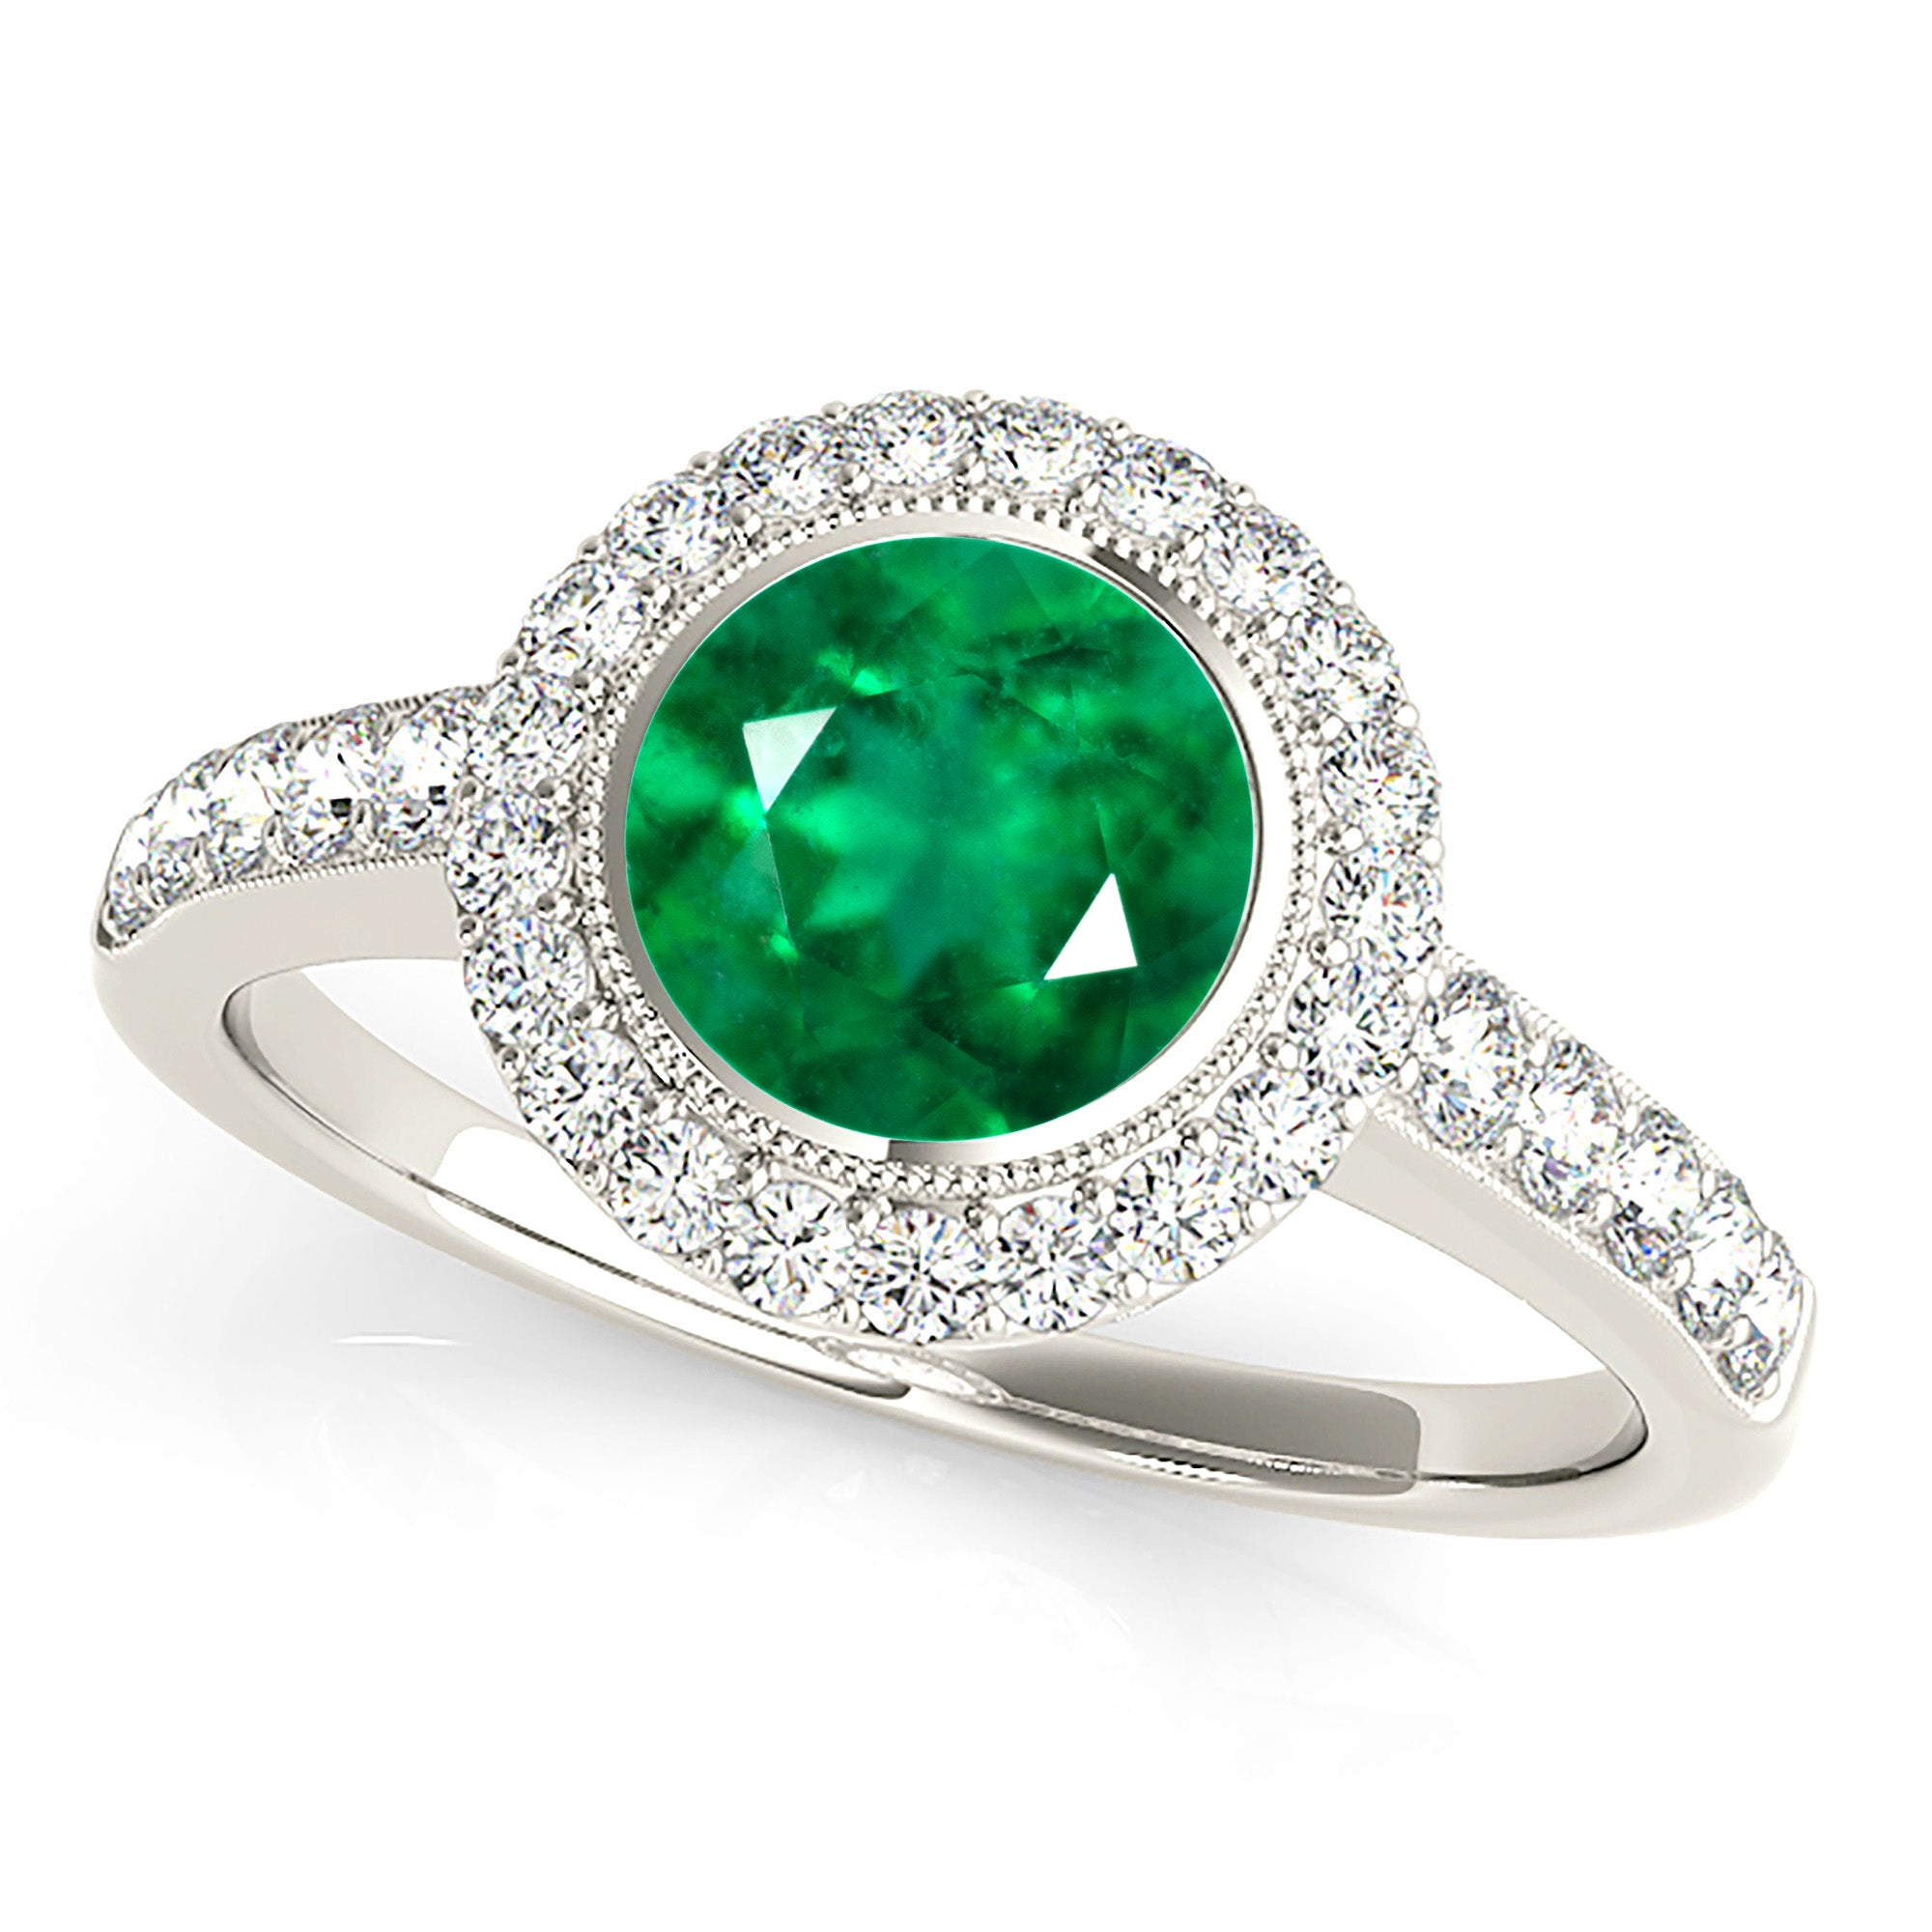 1.14 ct. Genuine Emerald Ring with 0.40 ctw. Diamond Milgrain Halo And Simple Diamond Band-in 14K/18K White, Yellow, Rose Gold and Platinum - Christmas Jewelry Gift -VIRABYANI